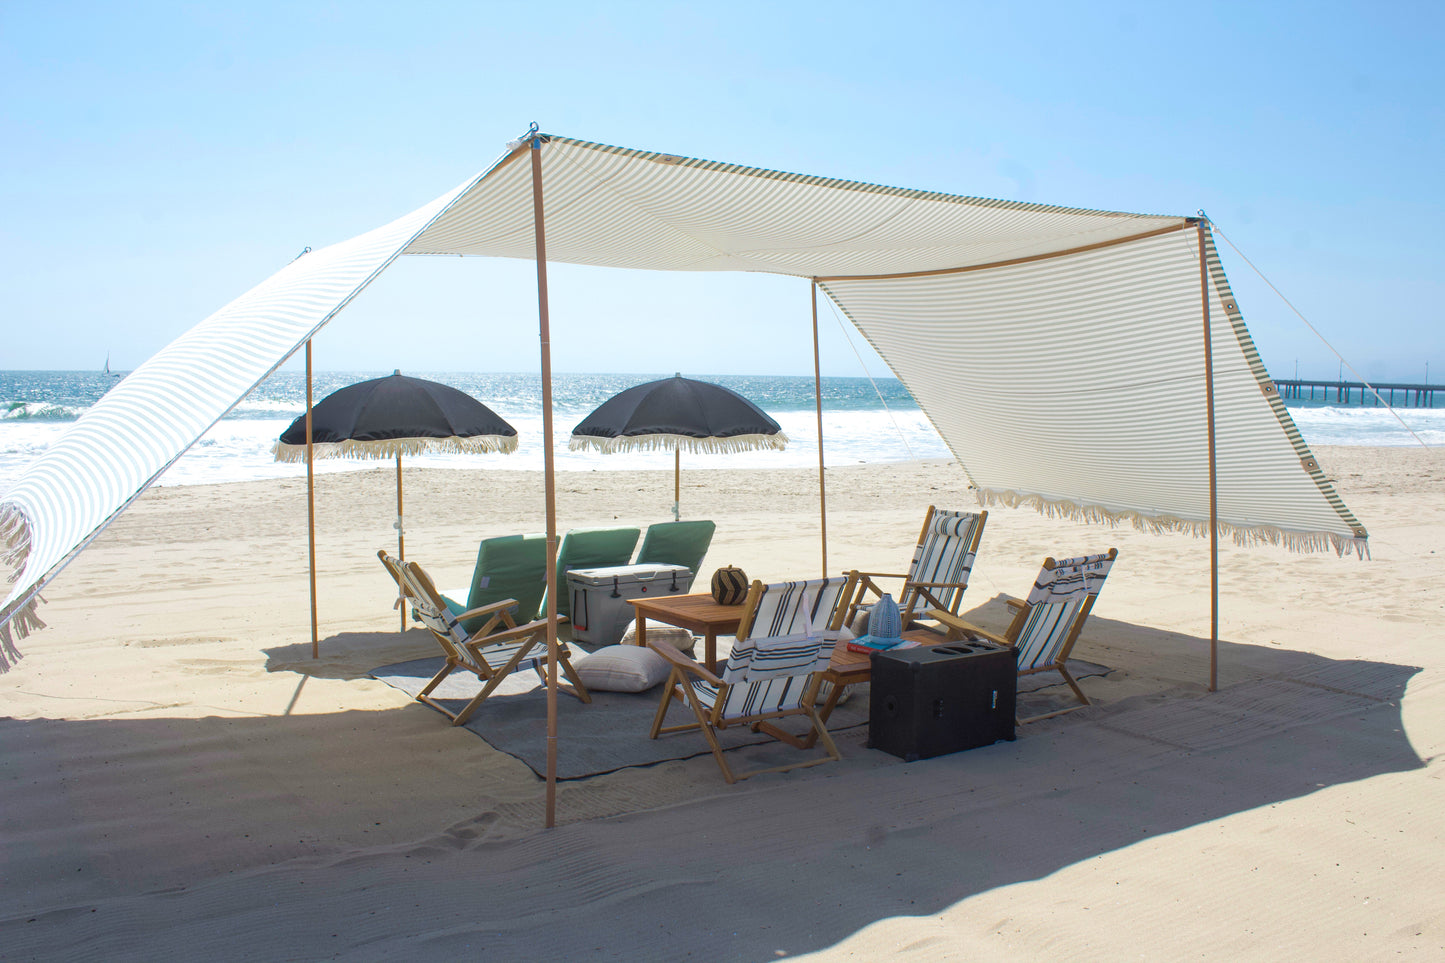 The Villa luxury beach cabana rental from The Beach Oasis in Marina Del Rey